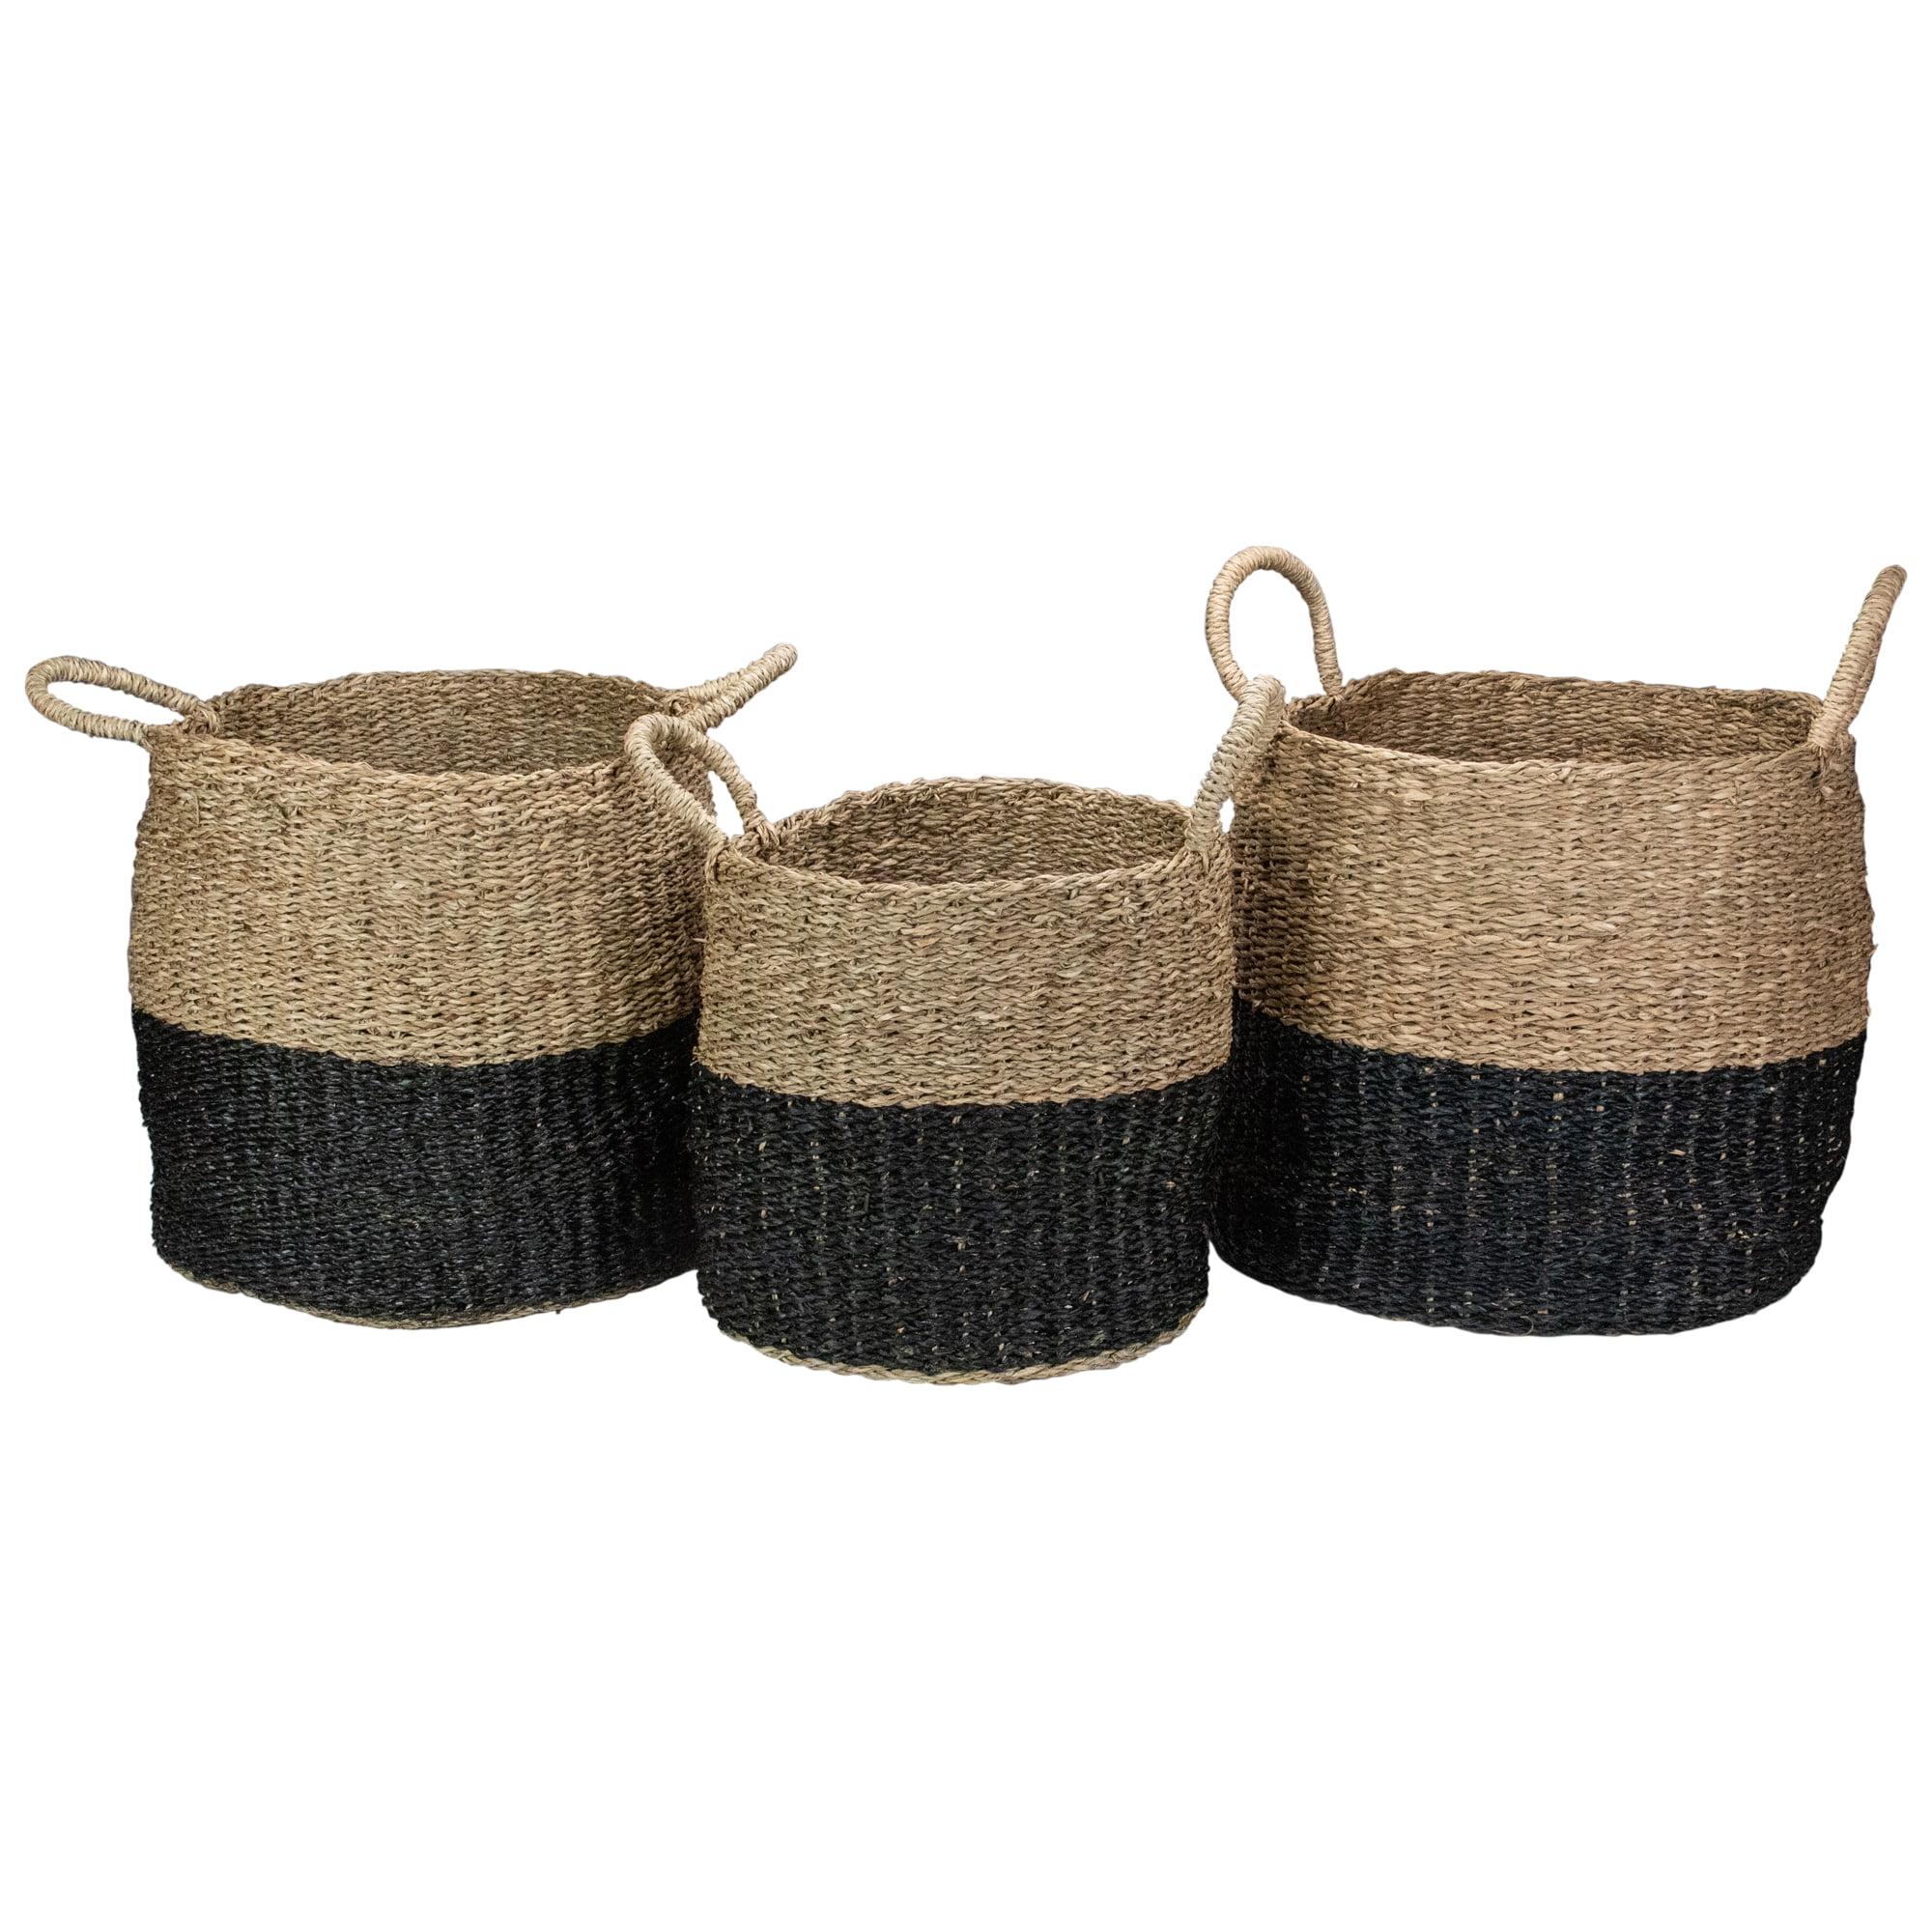 Rustic Seagrass Round Storage Baskets, Set of 3, Beige and Black